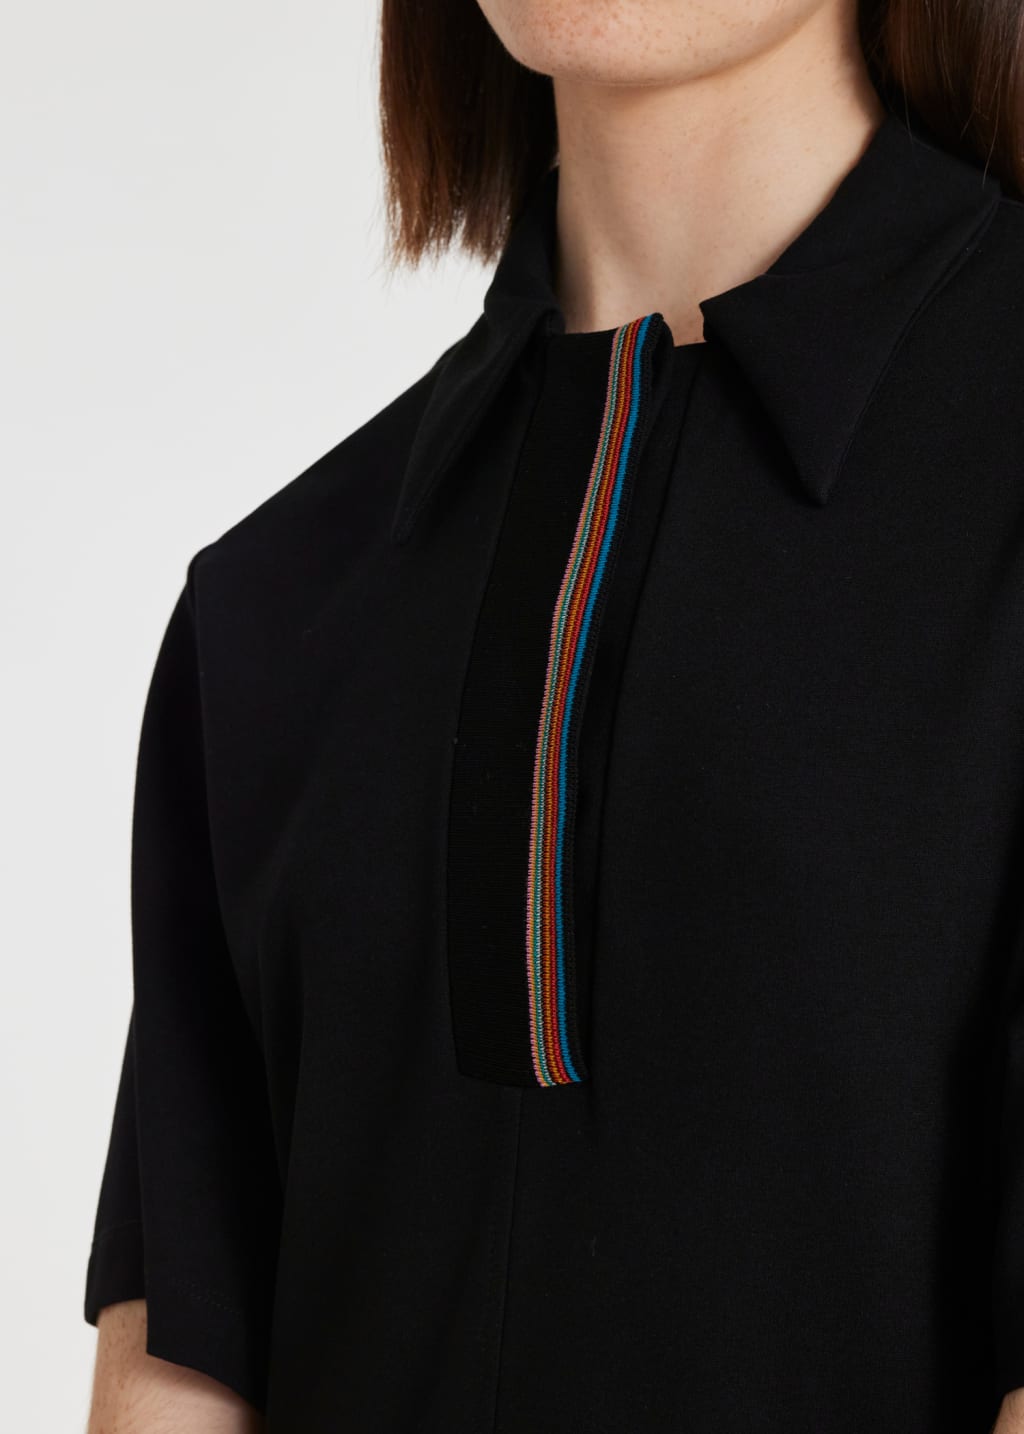 Model View - Women's Black Milano 'Signature Stripe' Polo Dress by Paul Smith